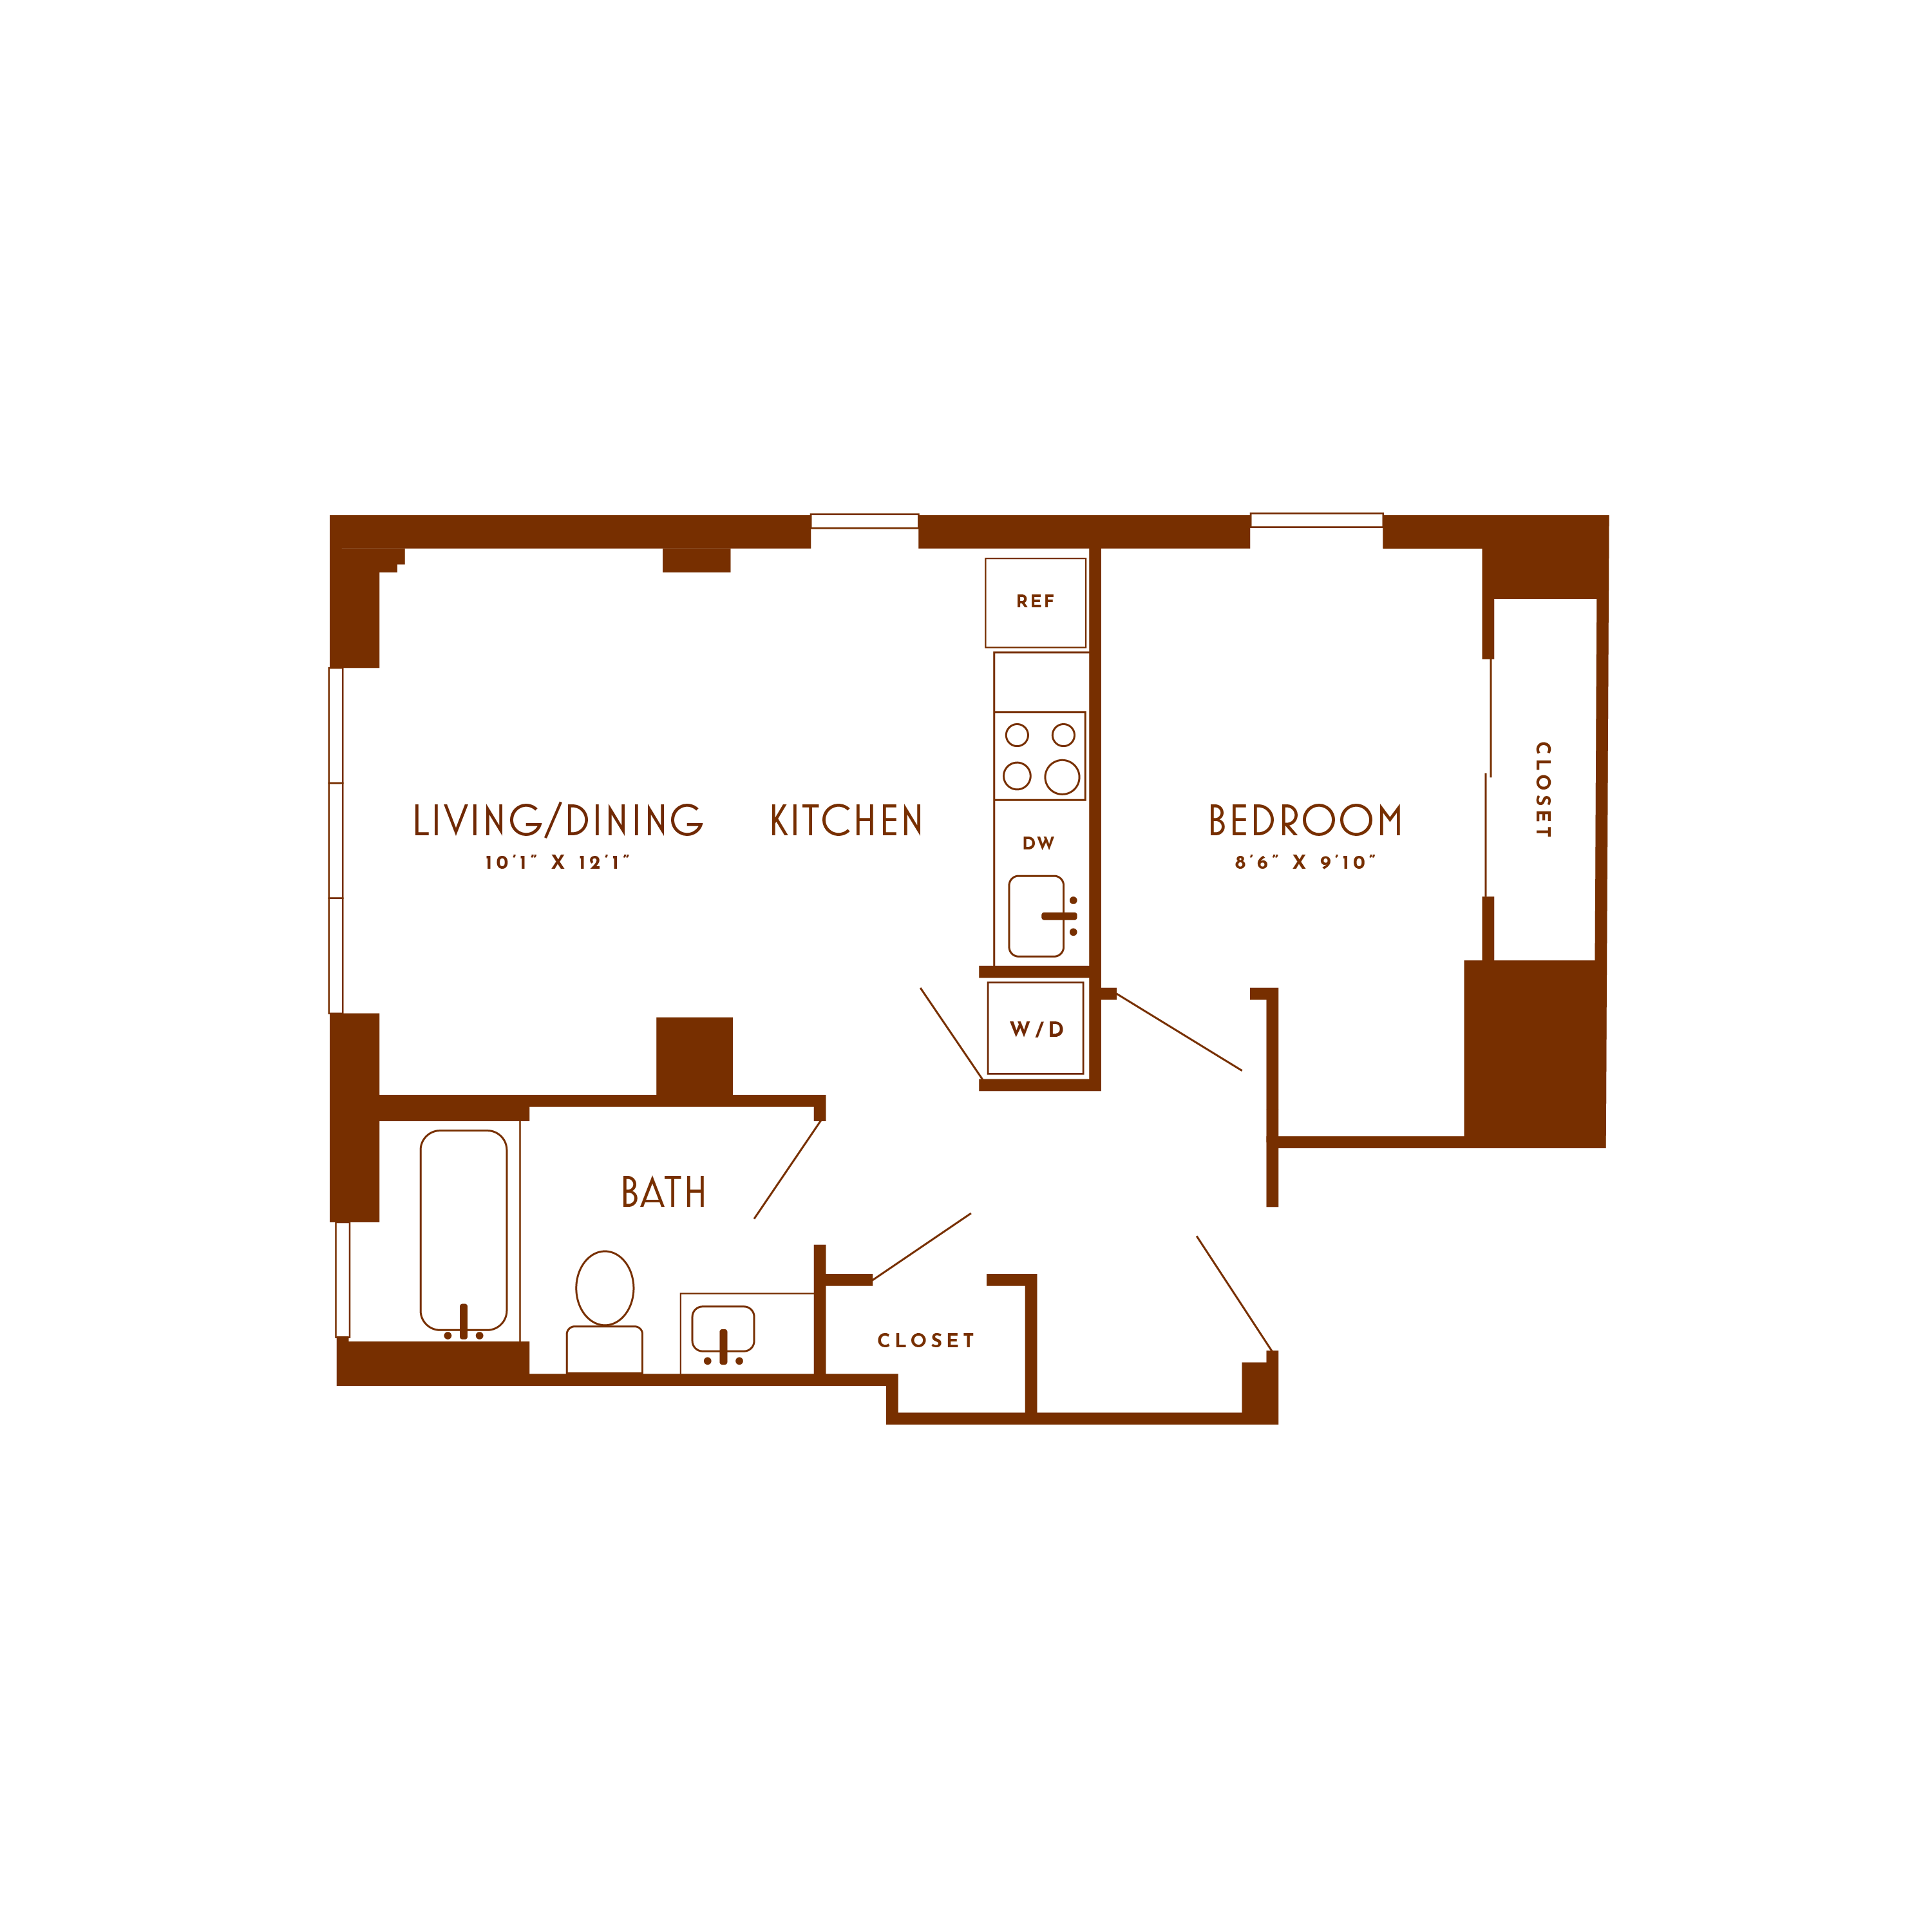 Floor plan image of unit 506